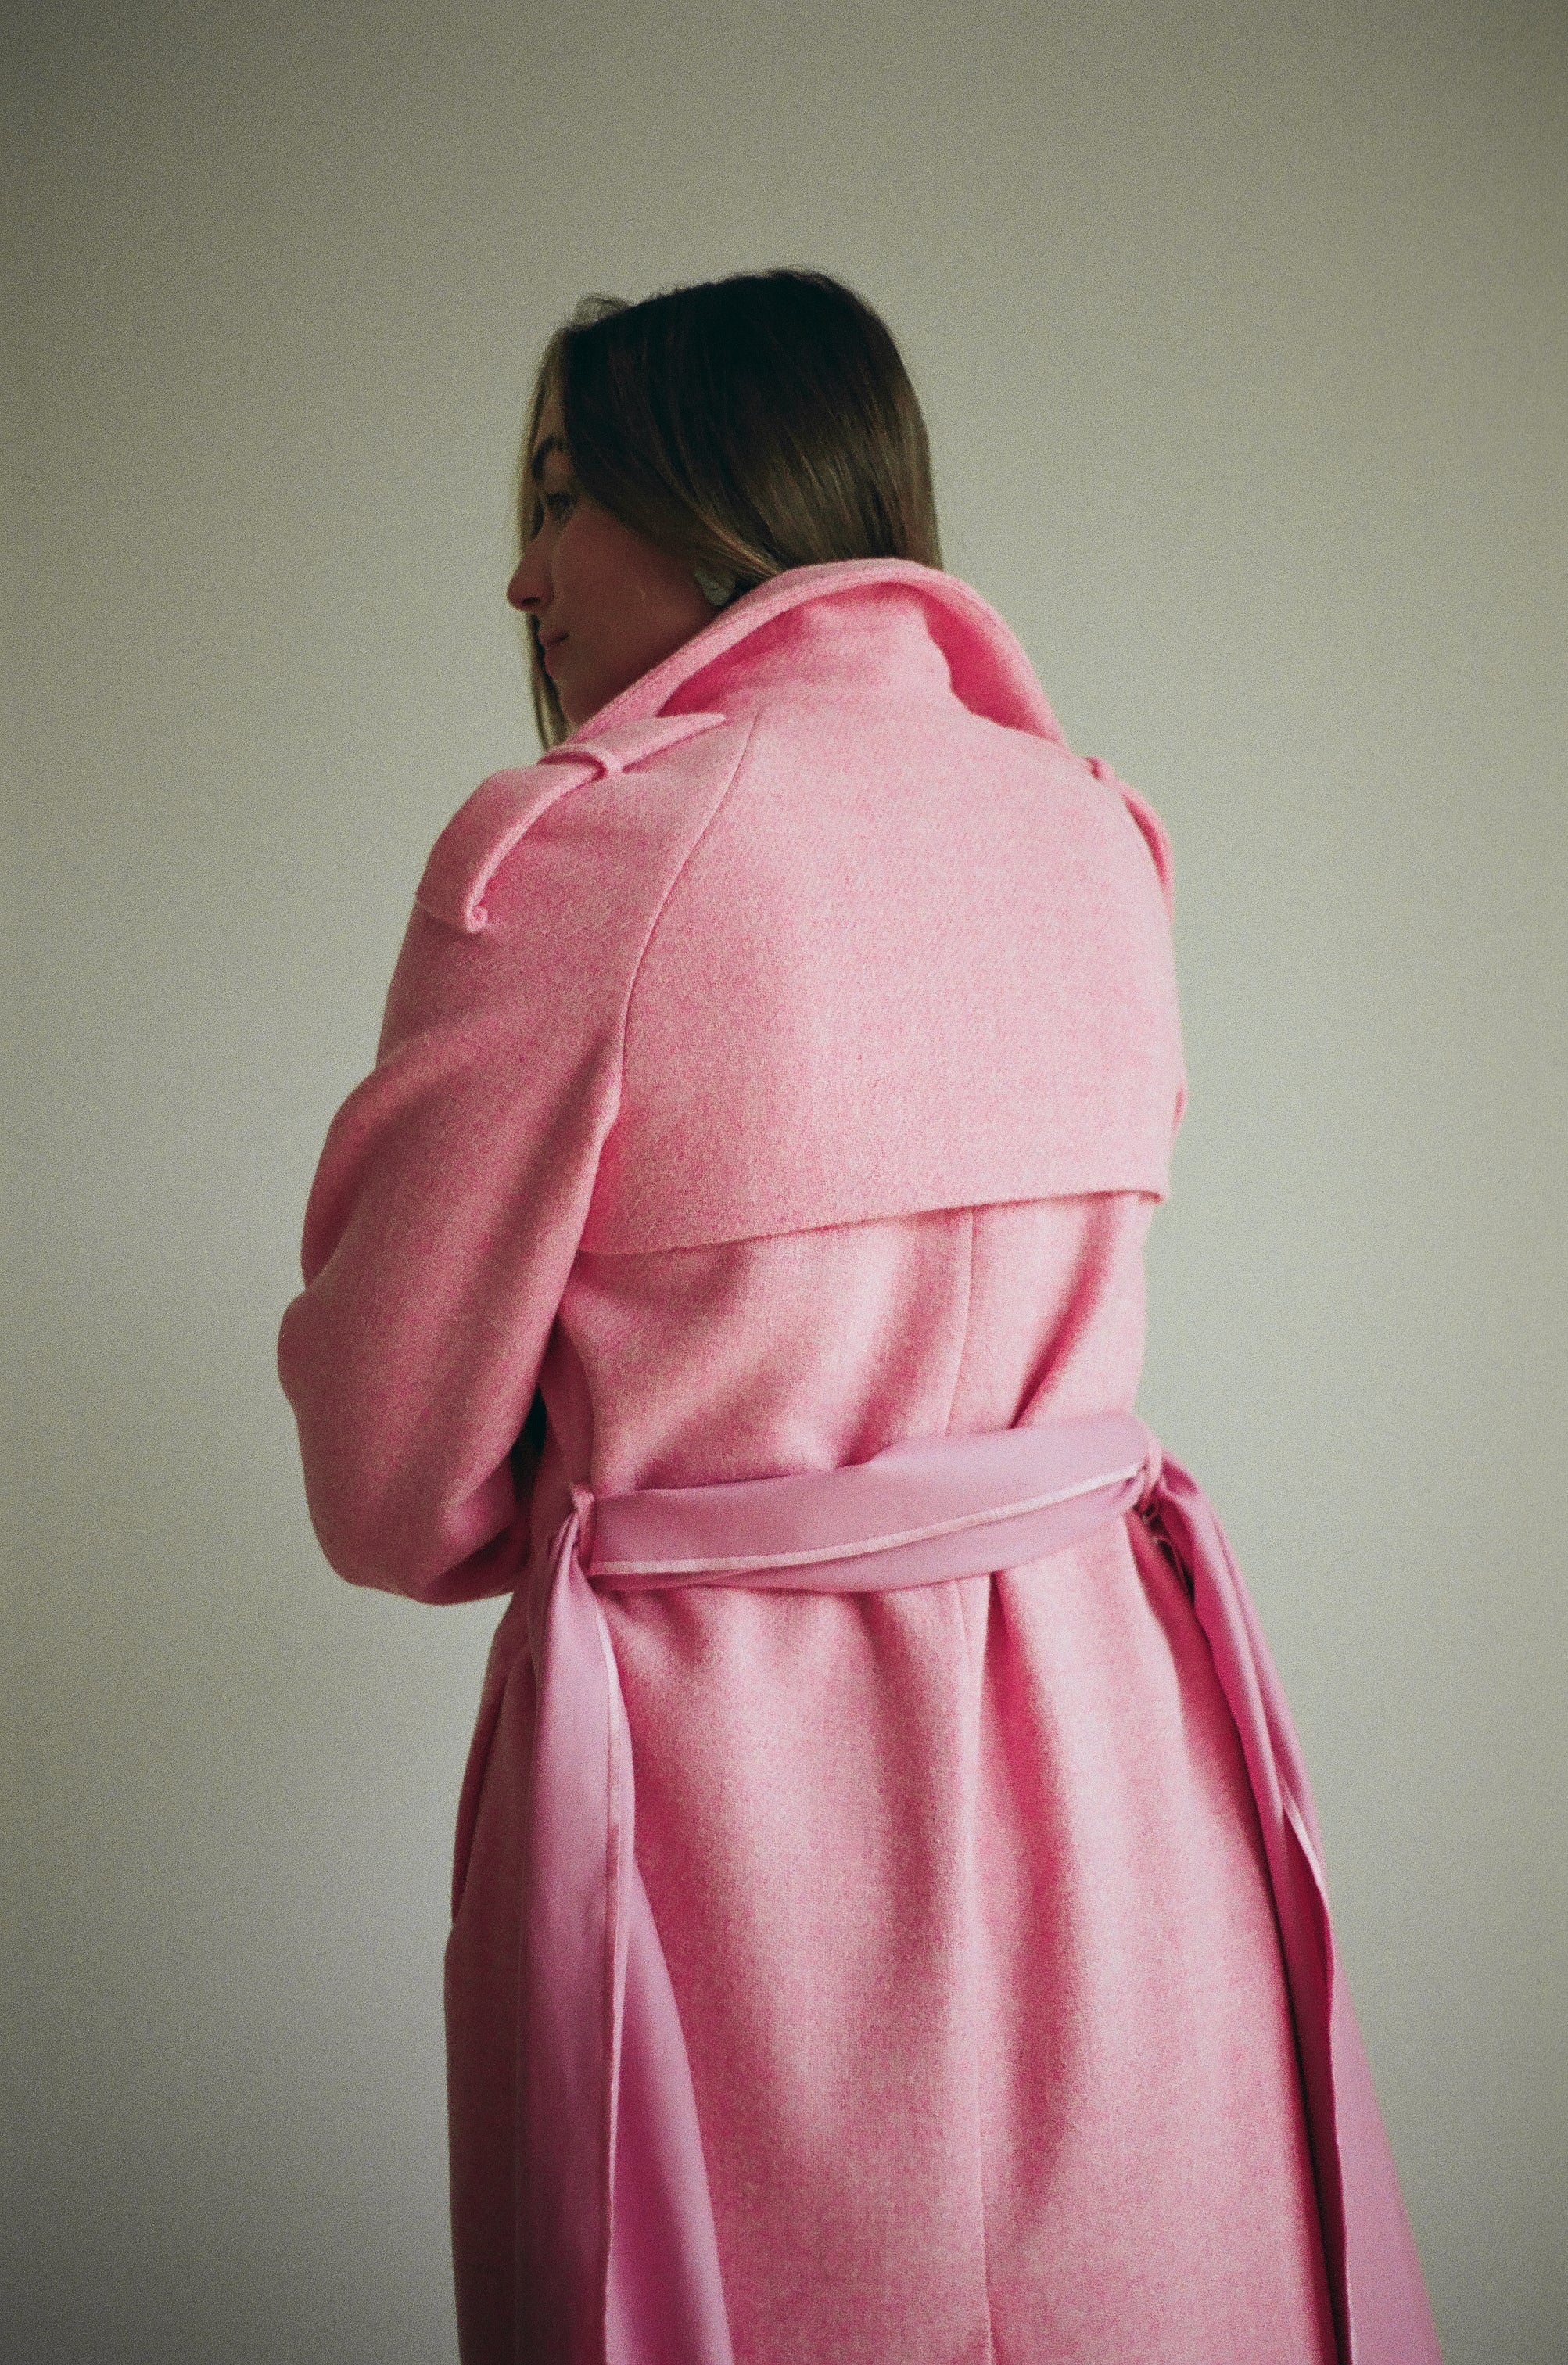 Pink Crush Harris Tweed Coat